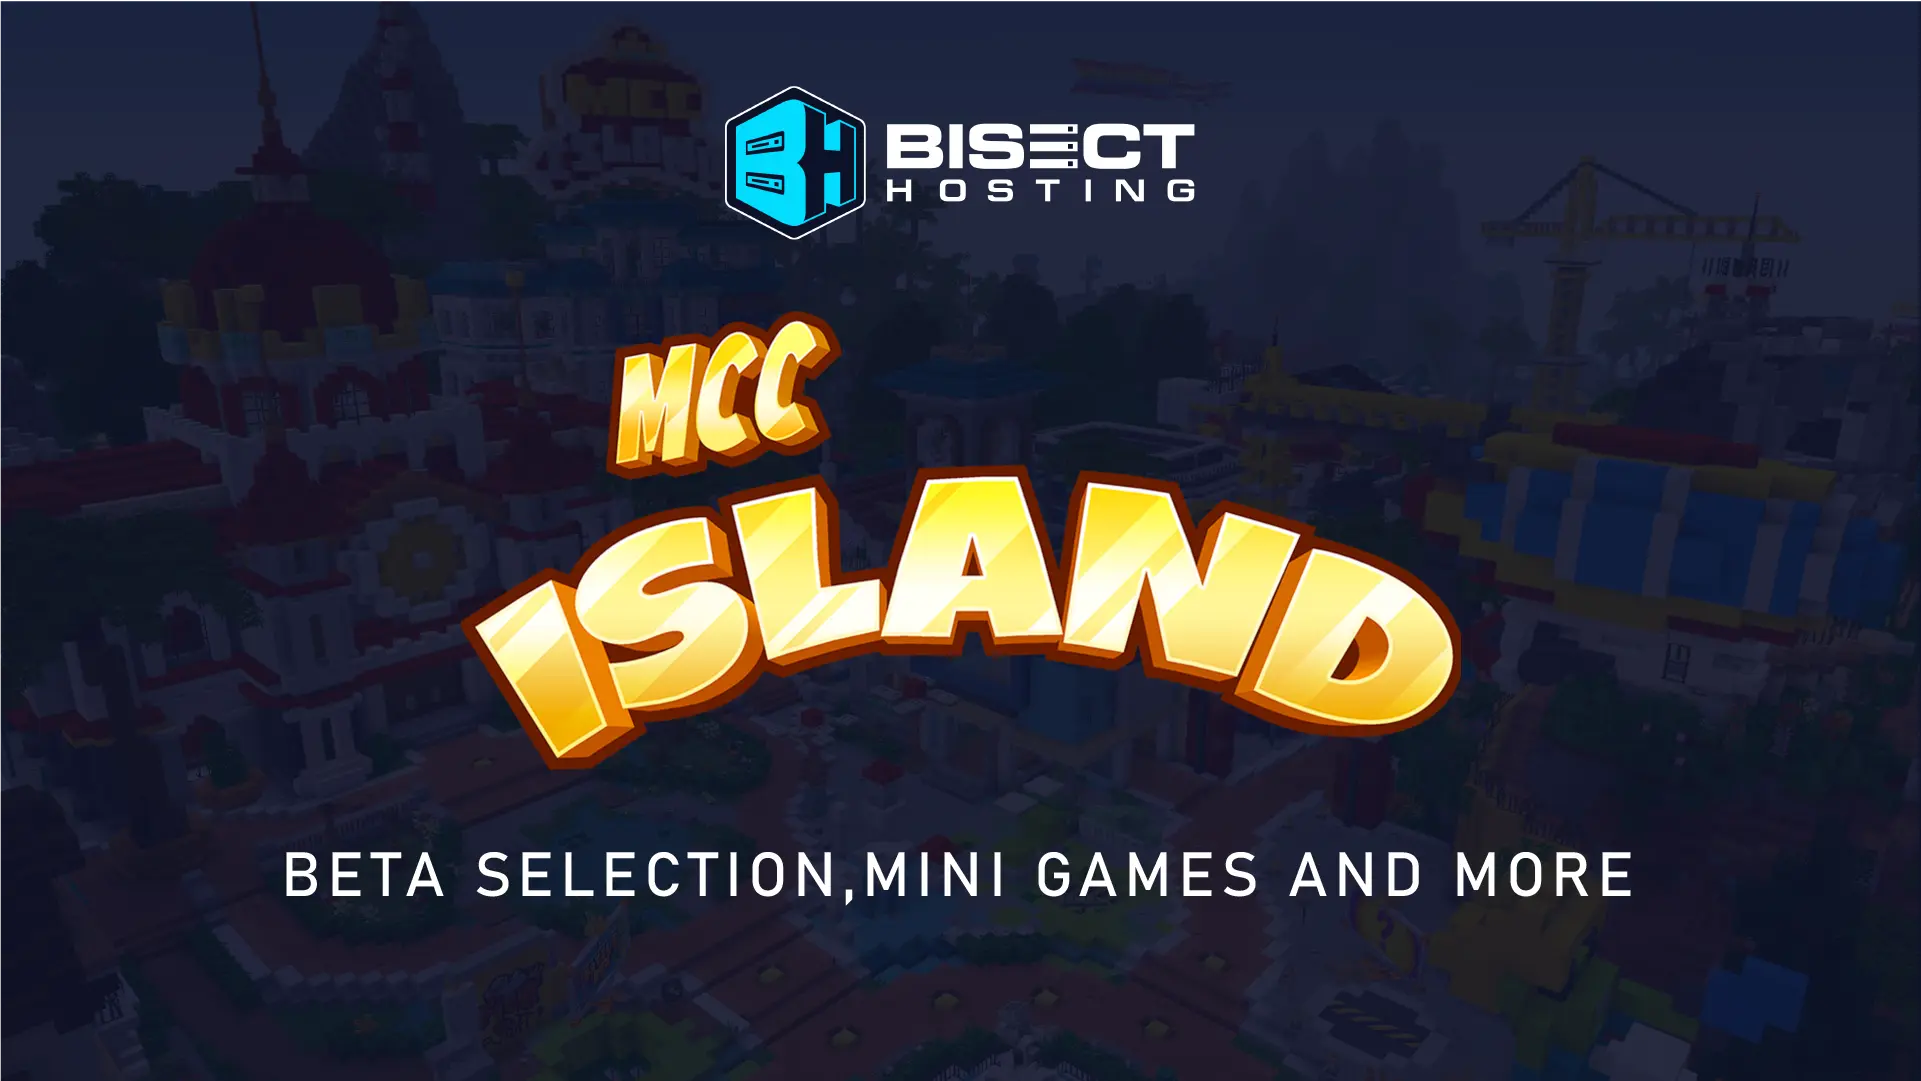 All MCC Island mini-games - Dot Esports